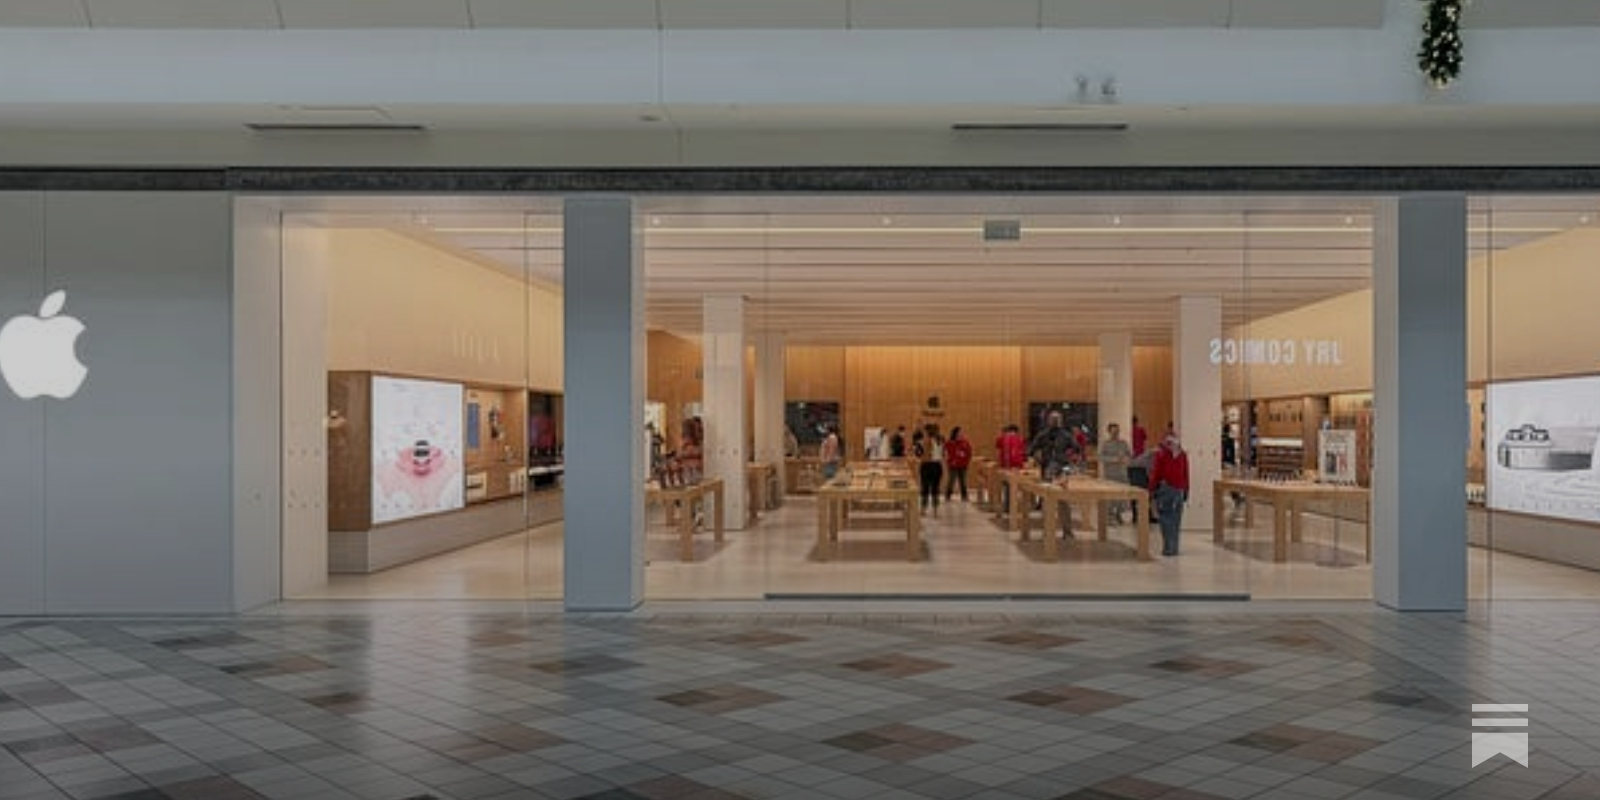 South Shore - Apple Store - Apple